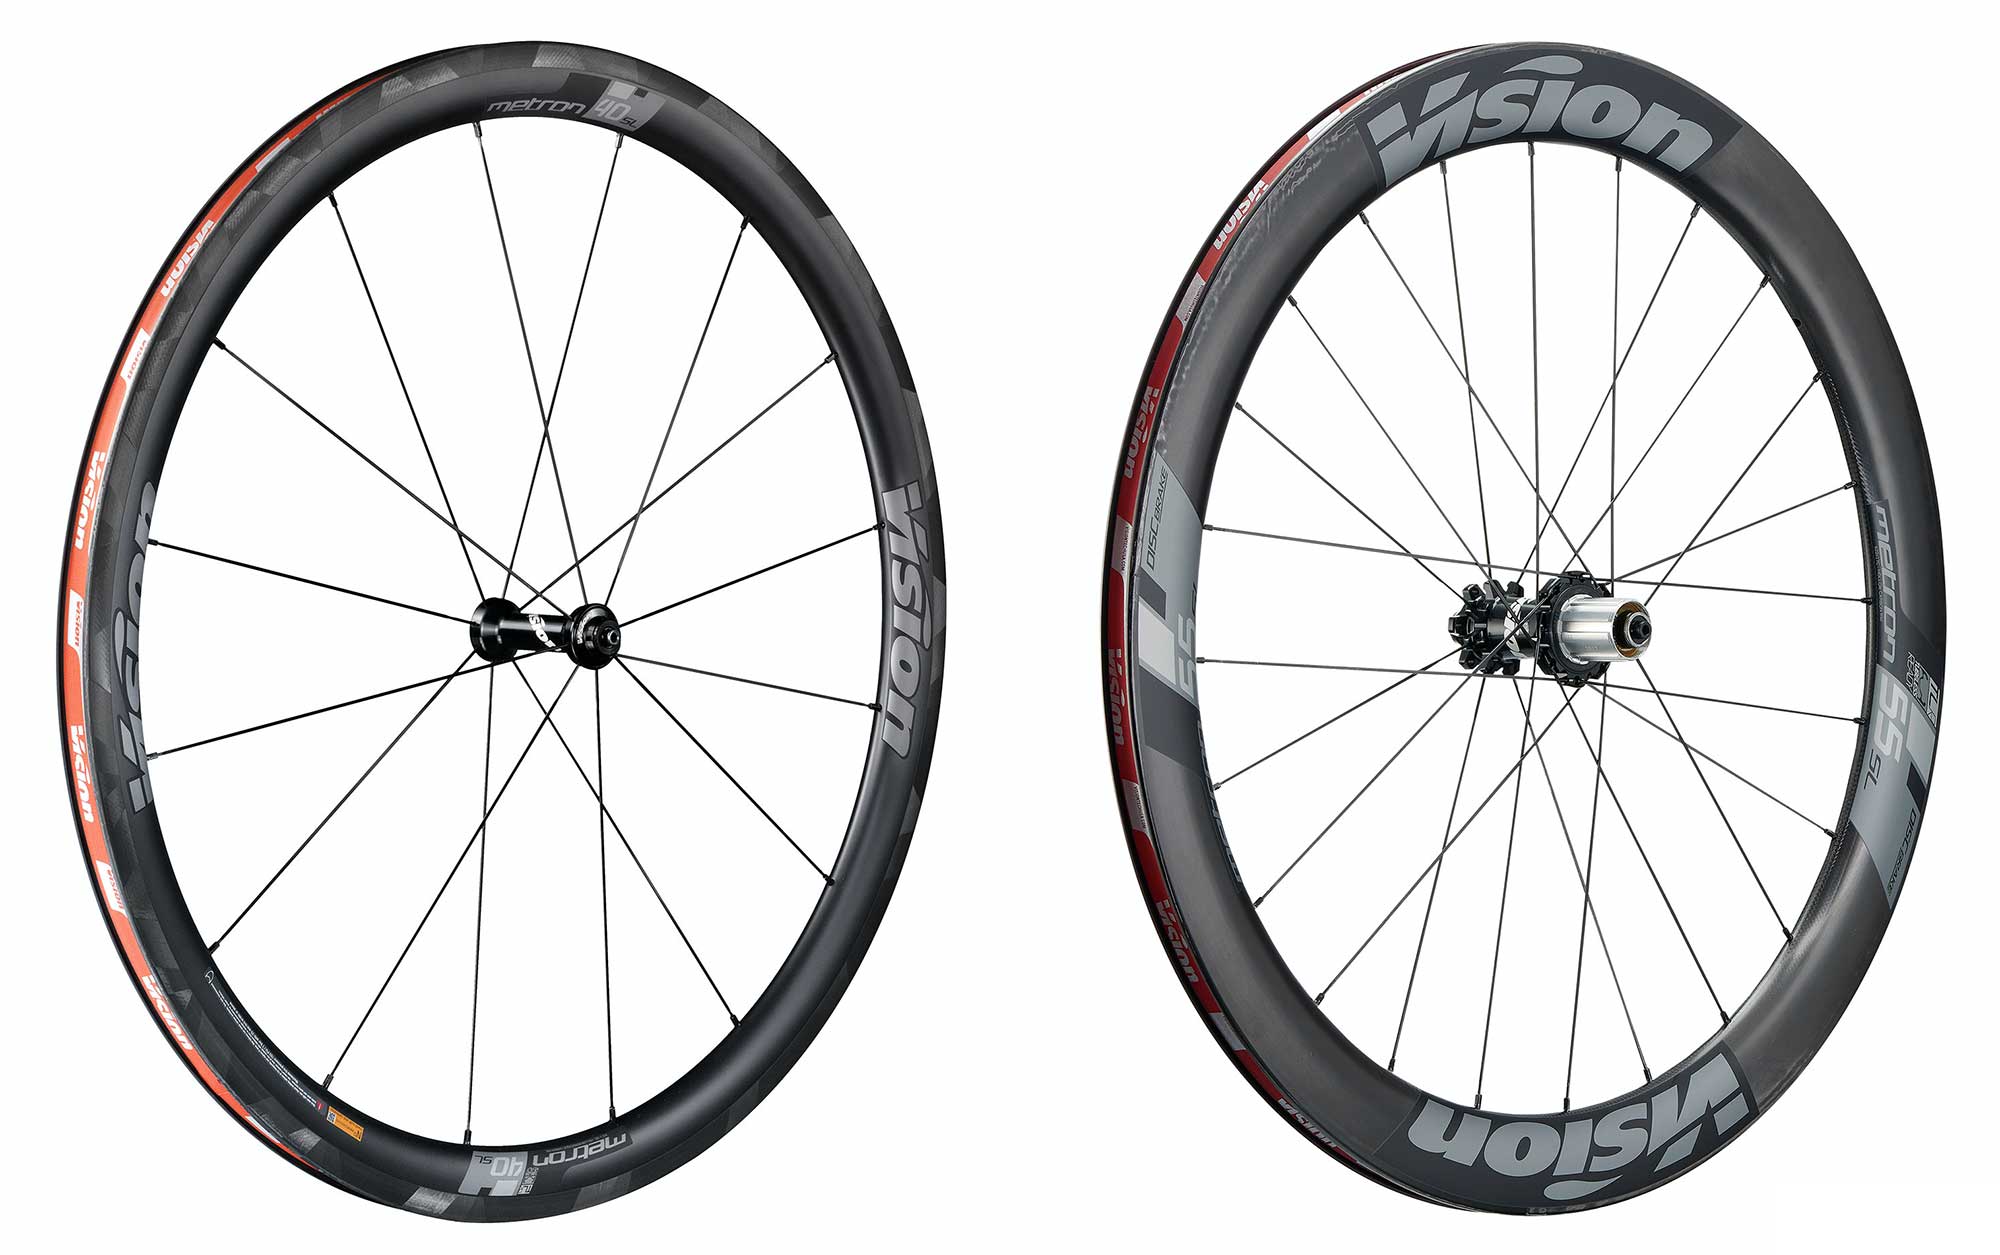 FSA Vision Metron SL aero road bike wheels with tubeless rims in 40 and 55 millimeter depths